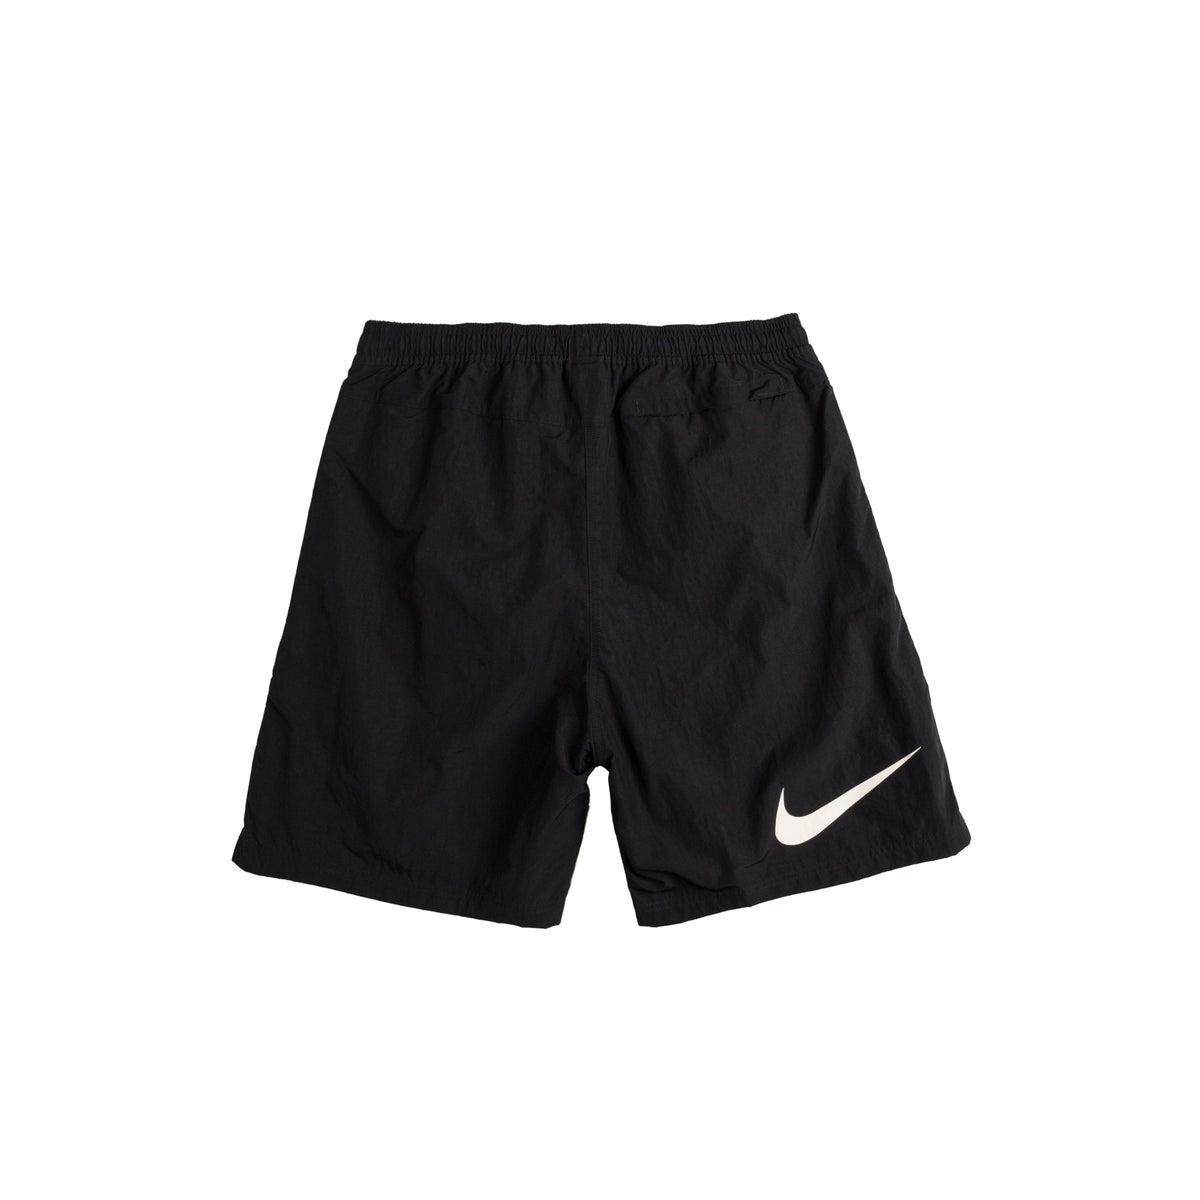 Nike x Stussy Short » Buy online now!